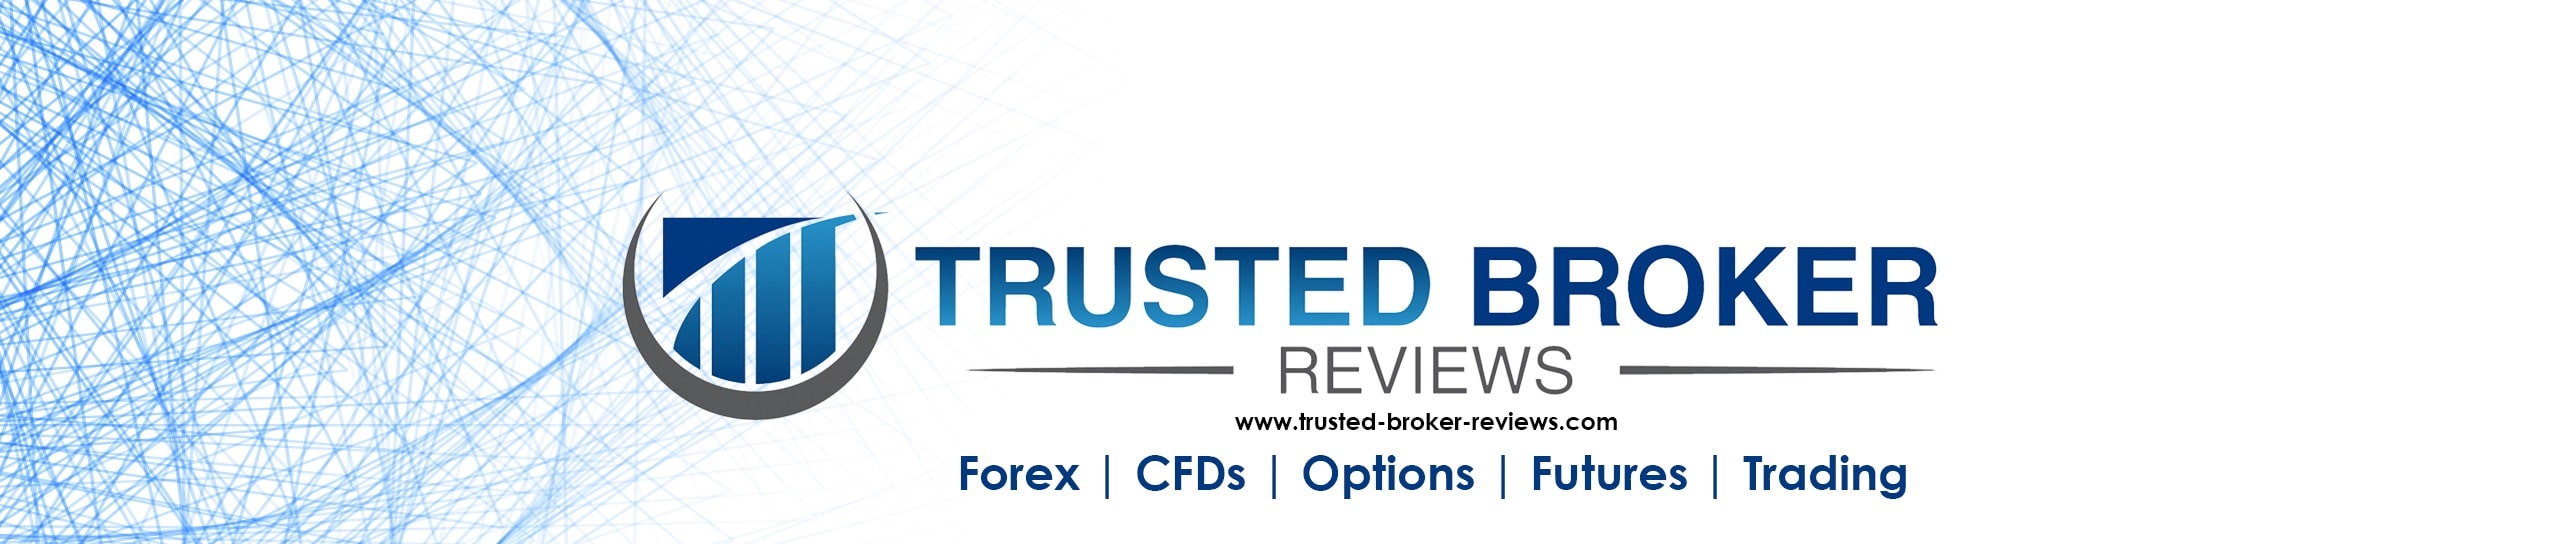 Trusted Broker Reviews Chi siamo Logo